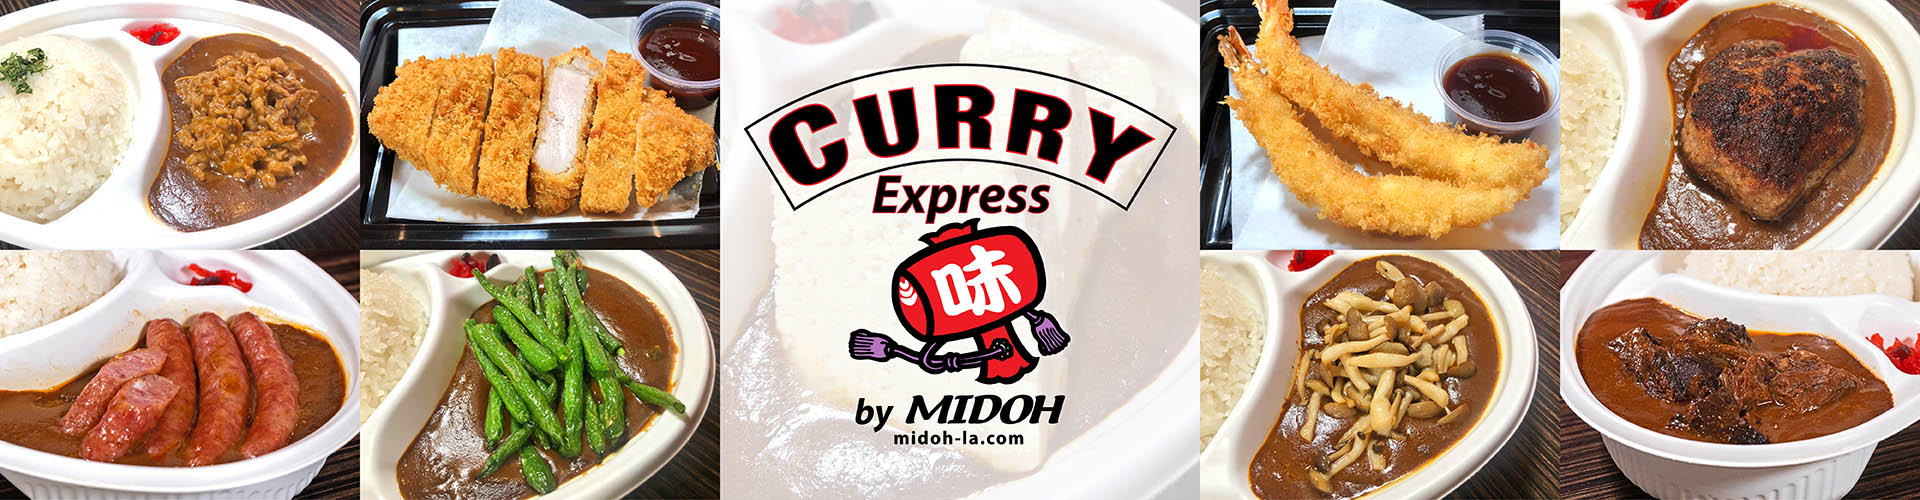 Curry Express logo banner